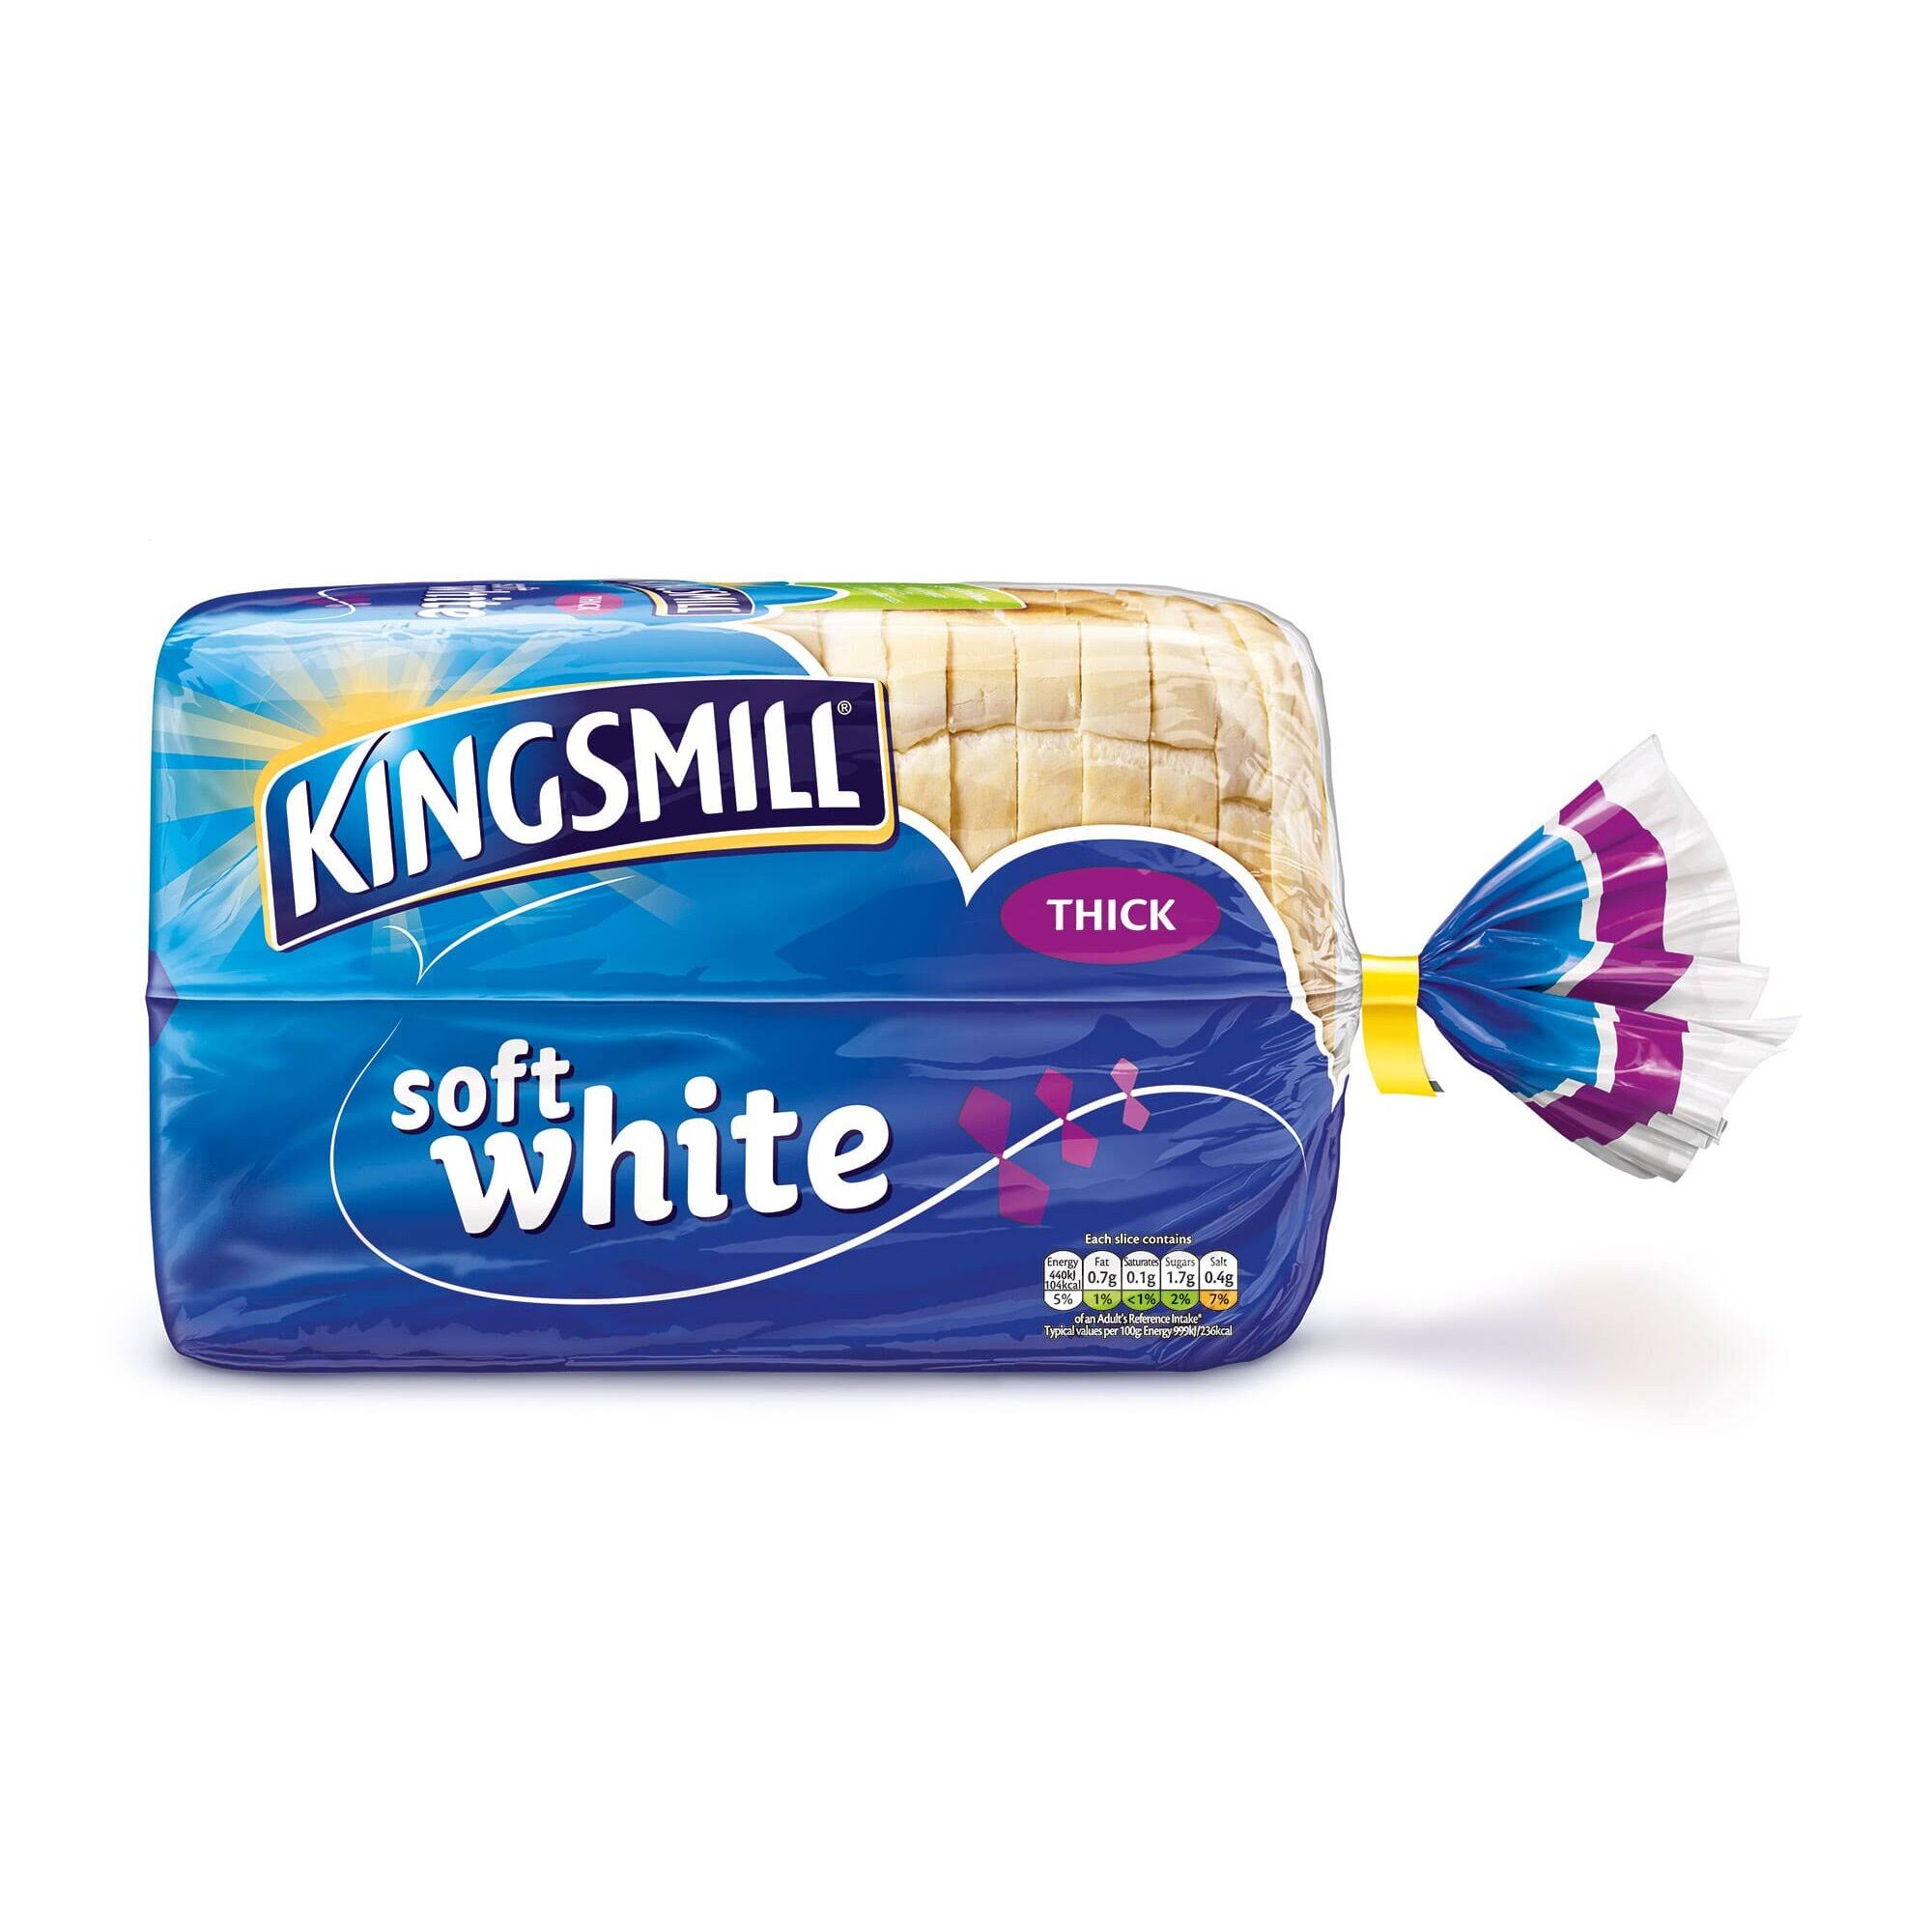 Kingsmill Soft White Thick Bread - 800g